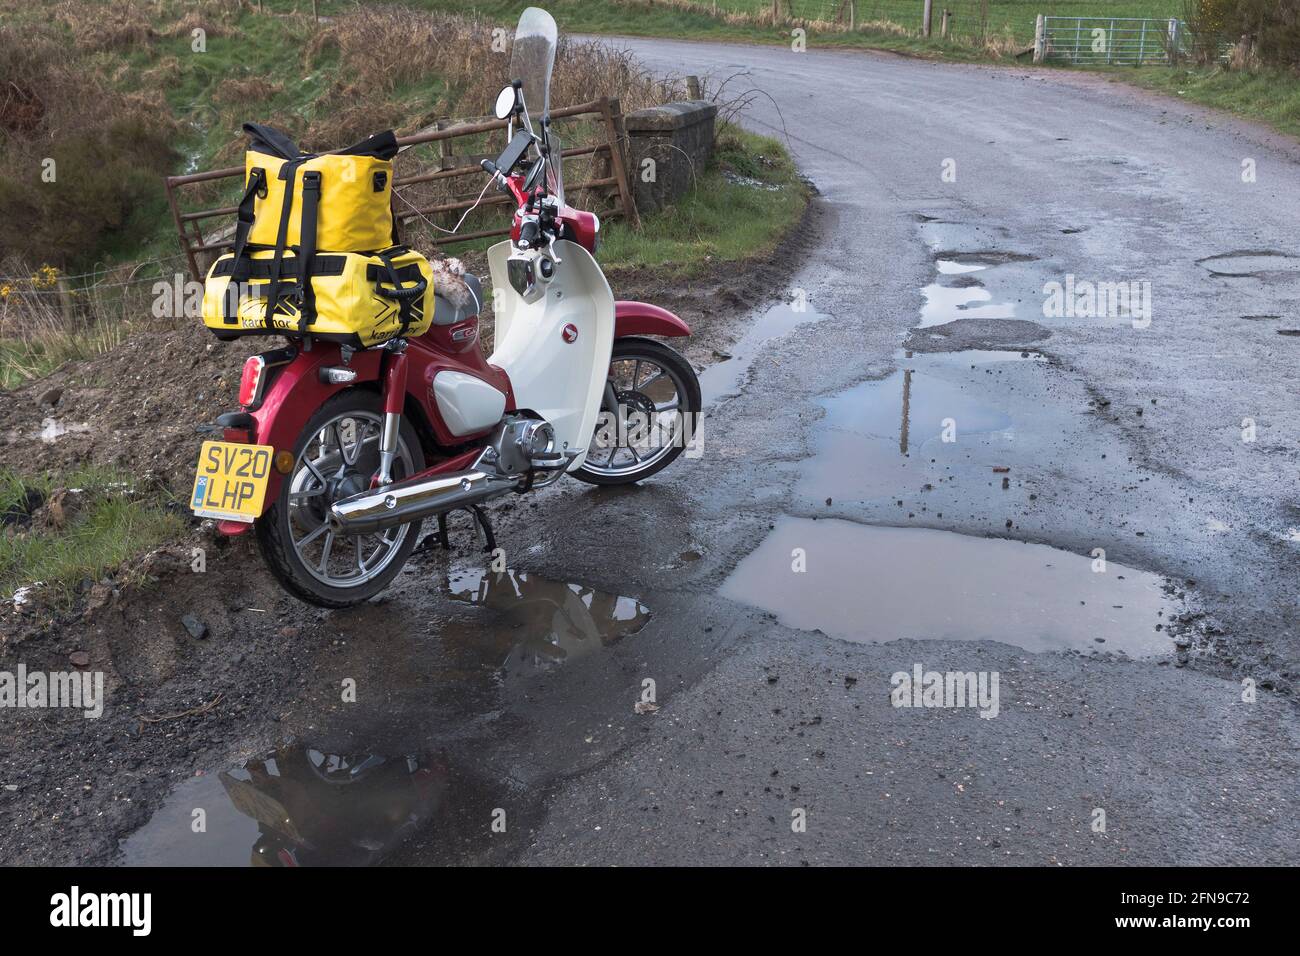 dh Roads SCOTLAND UK Pothole motorcycle by potholes deep puddle hole in damaged road surface Covid 19 winter weather damage close up poor roadway Stock Photo